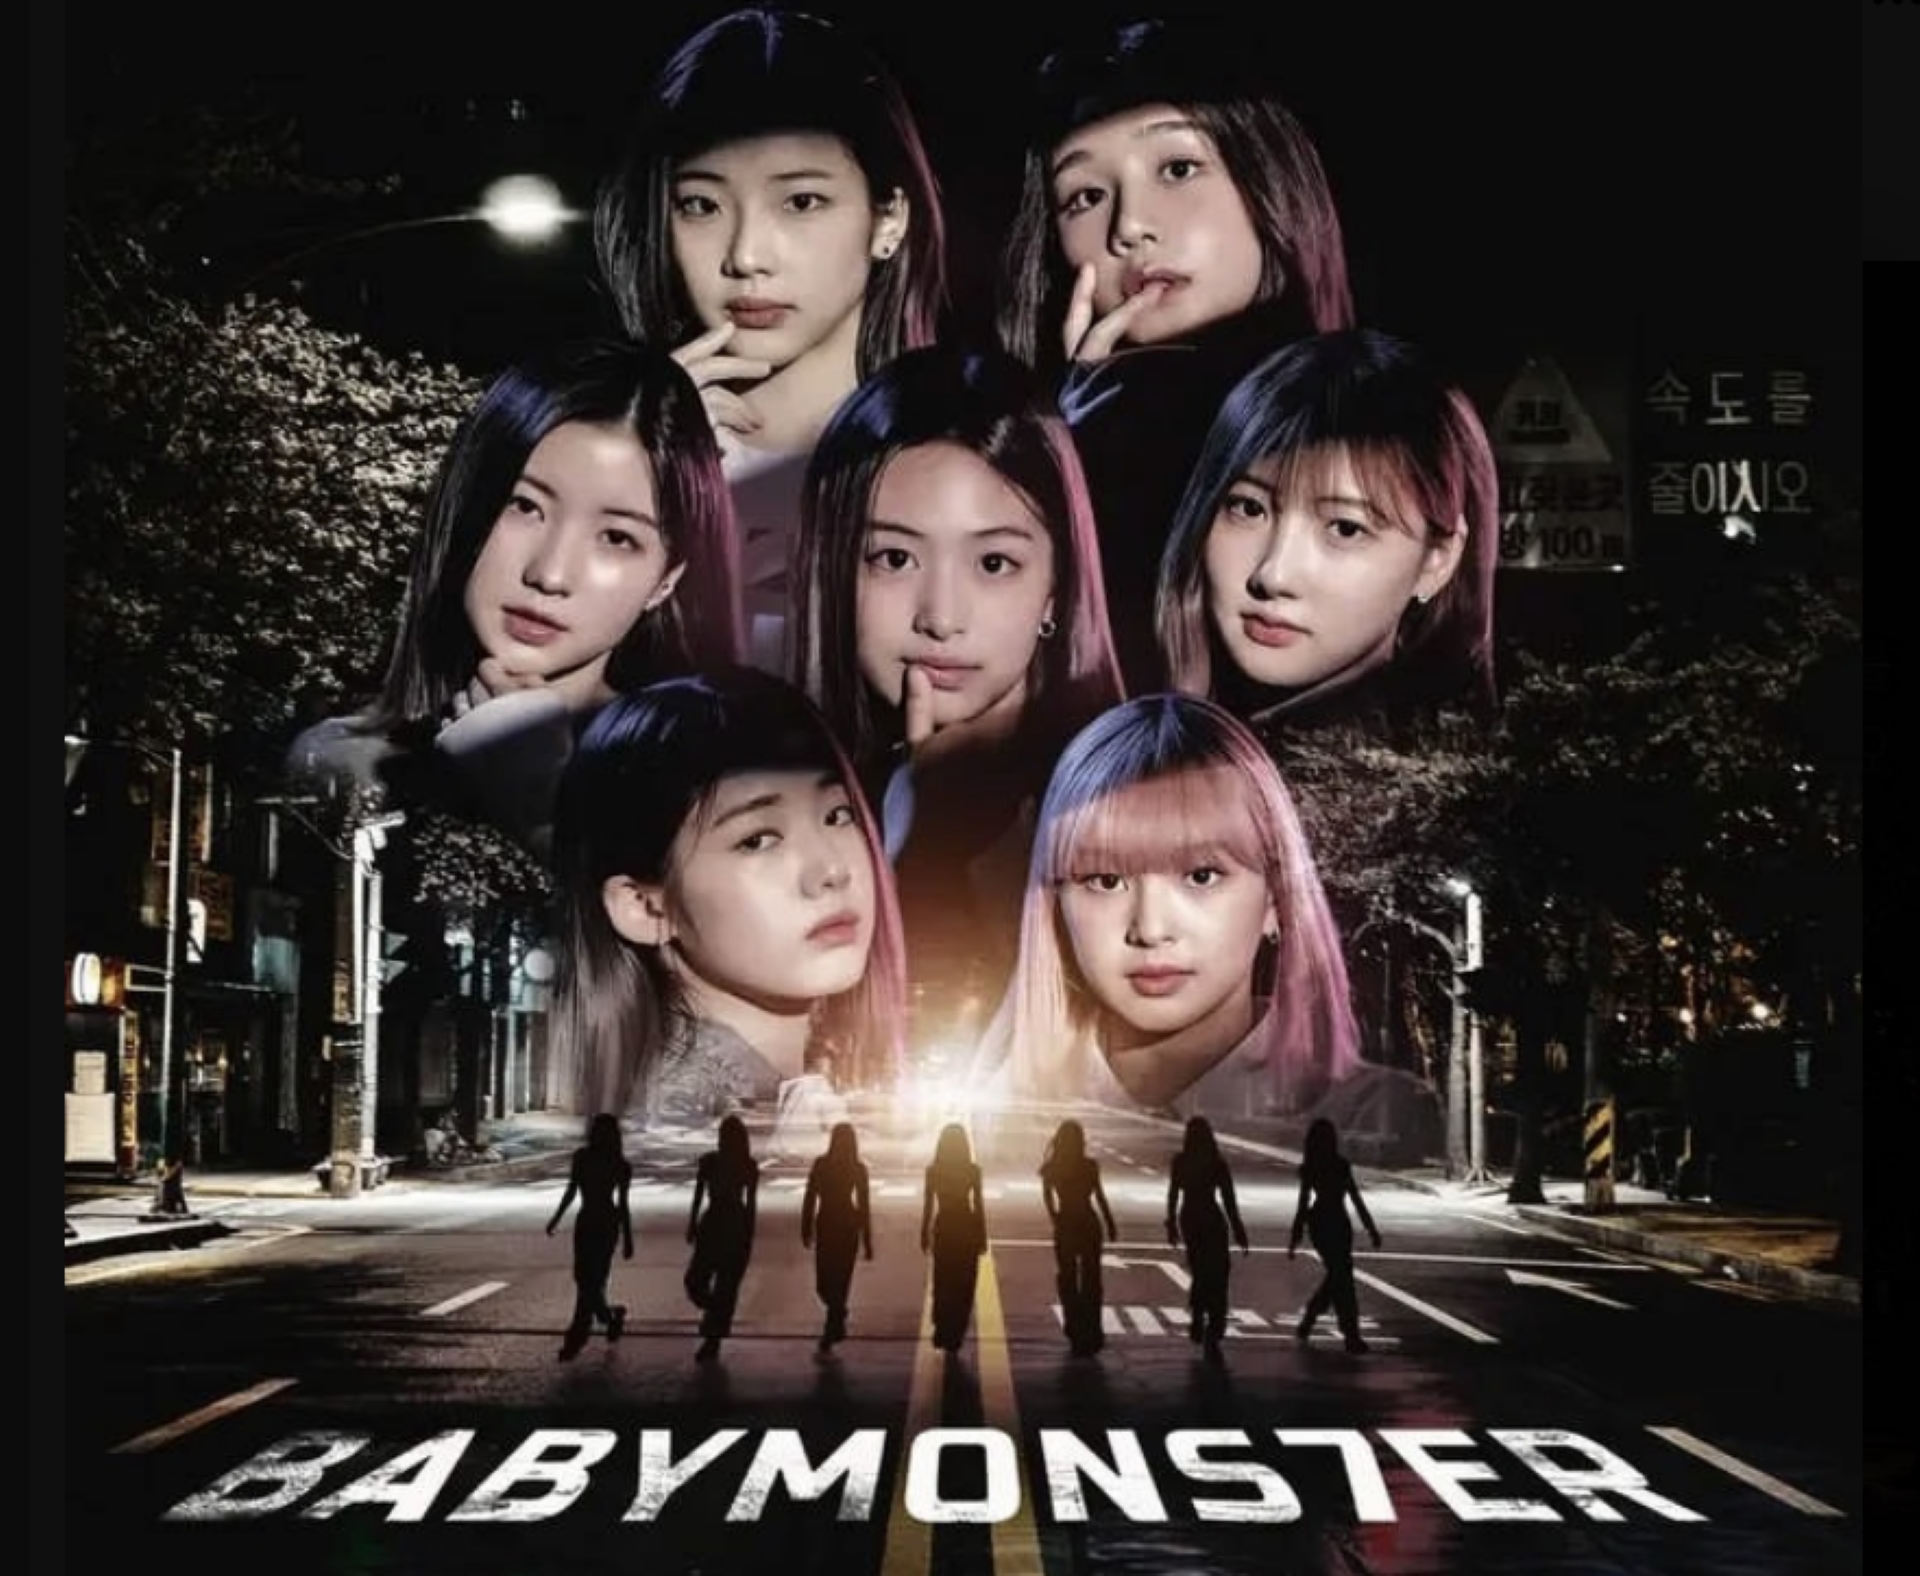 Ahyeon Comeback! BabyMonster Rilis Album Perdana dengan Formasi 7 Member